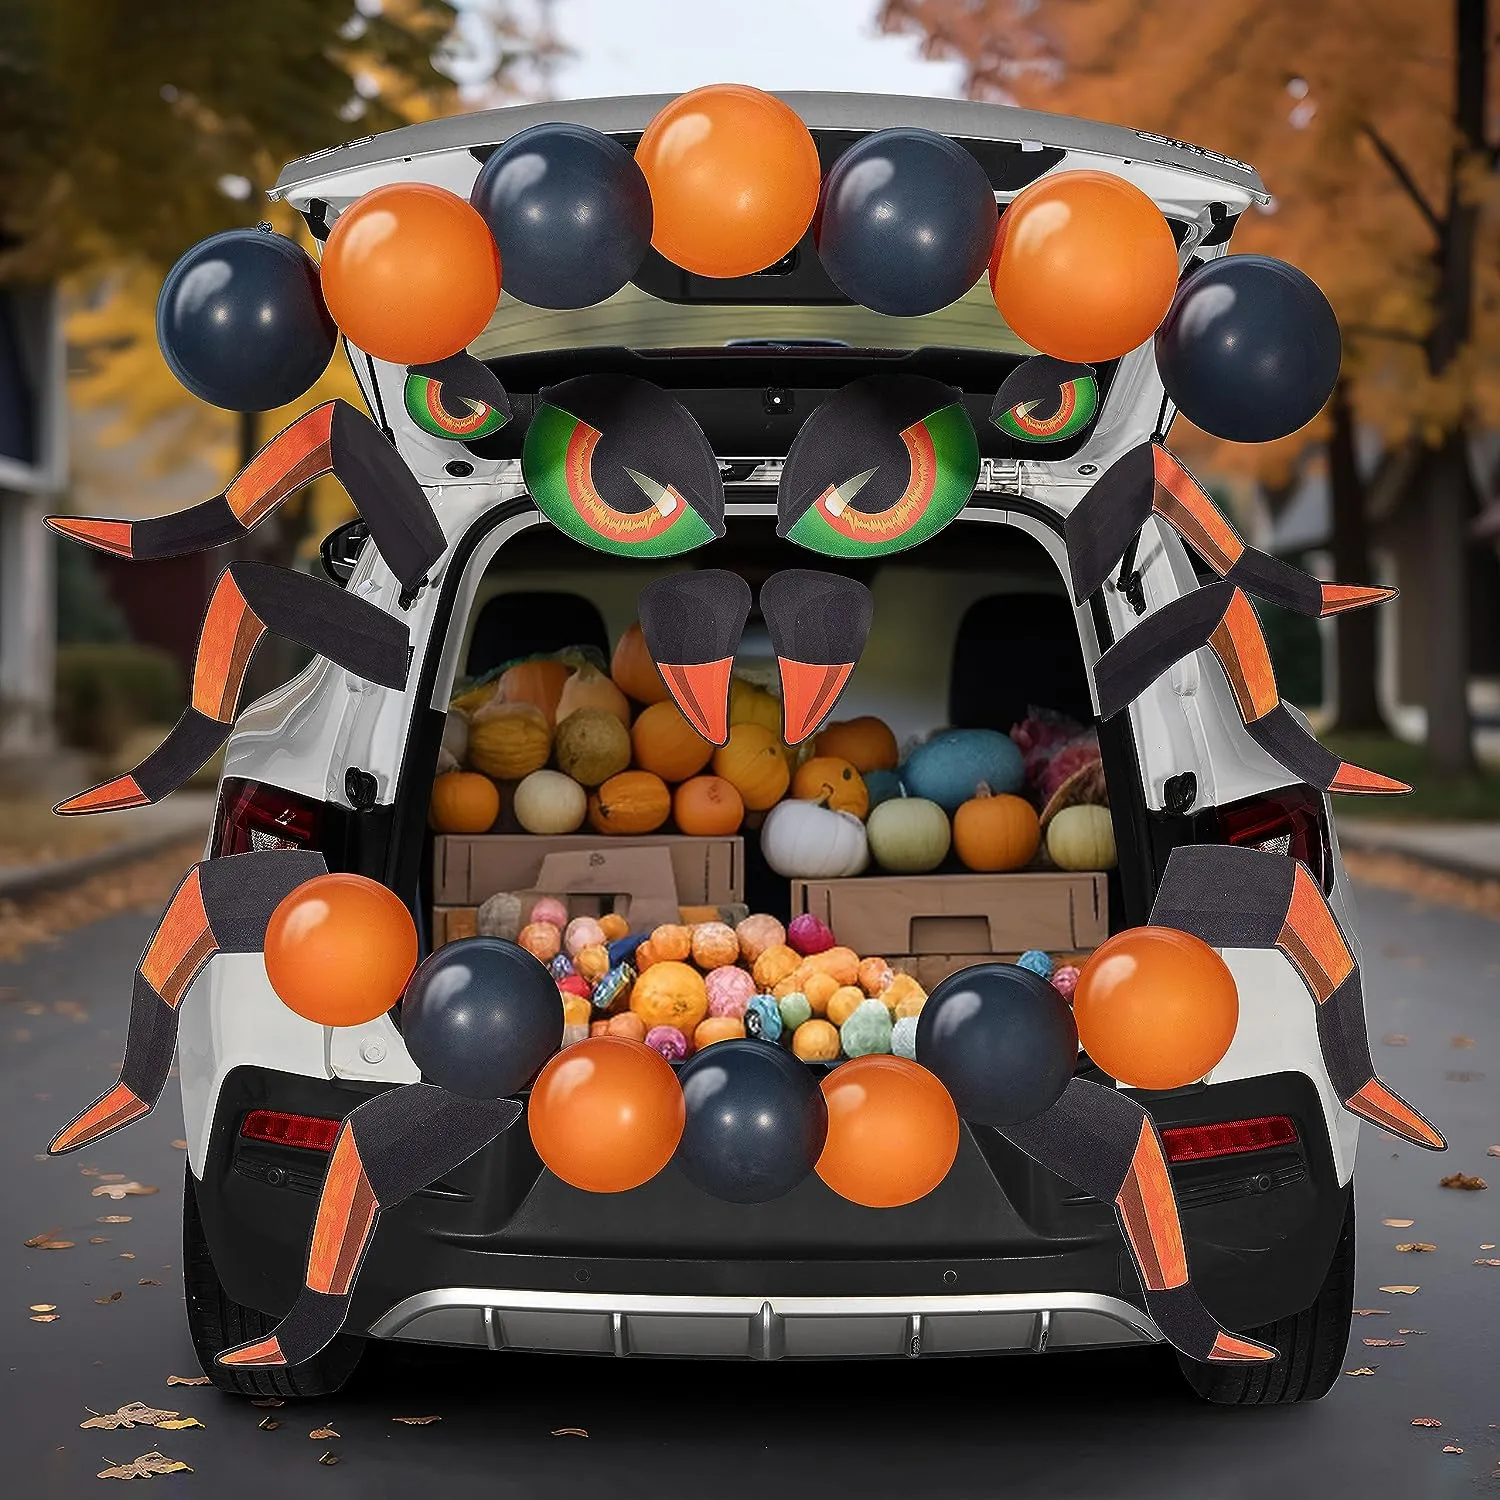 Joyin Halloween Trunk or Treat with Spider Design, Car Archway Garage Decoration